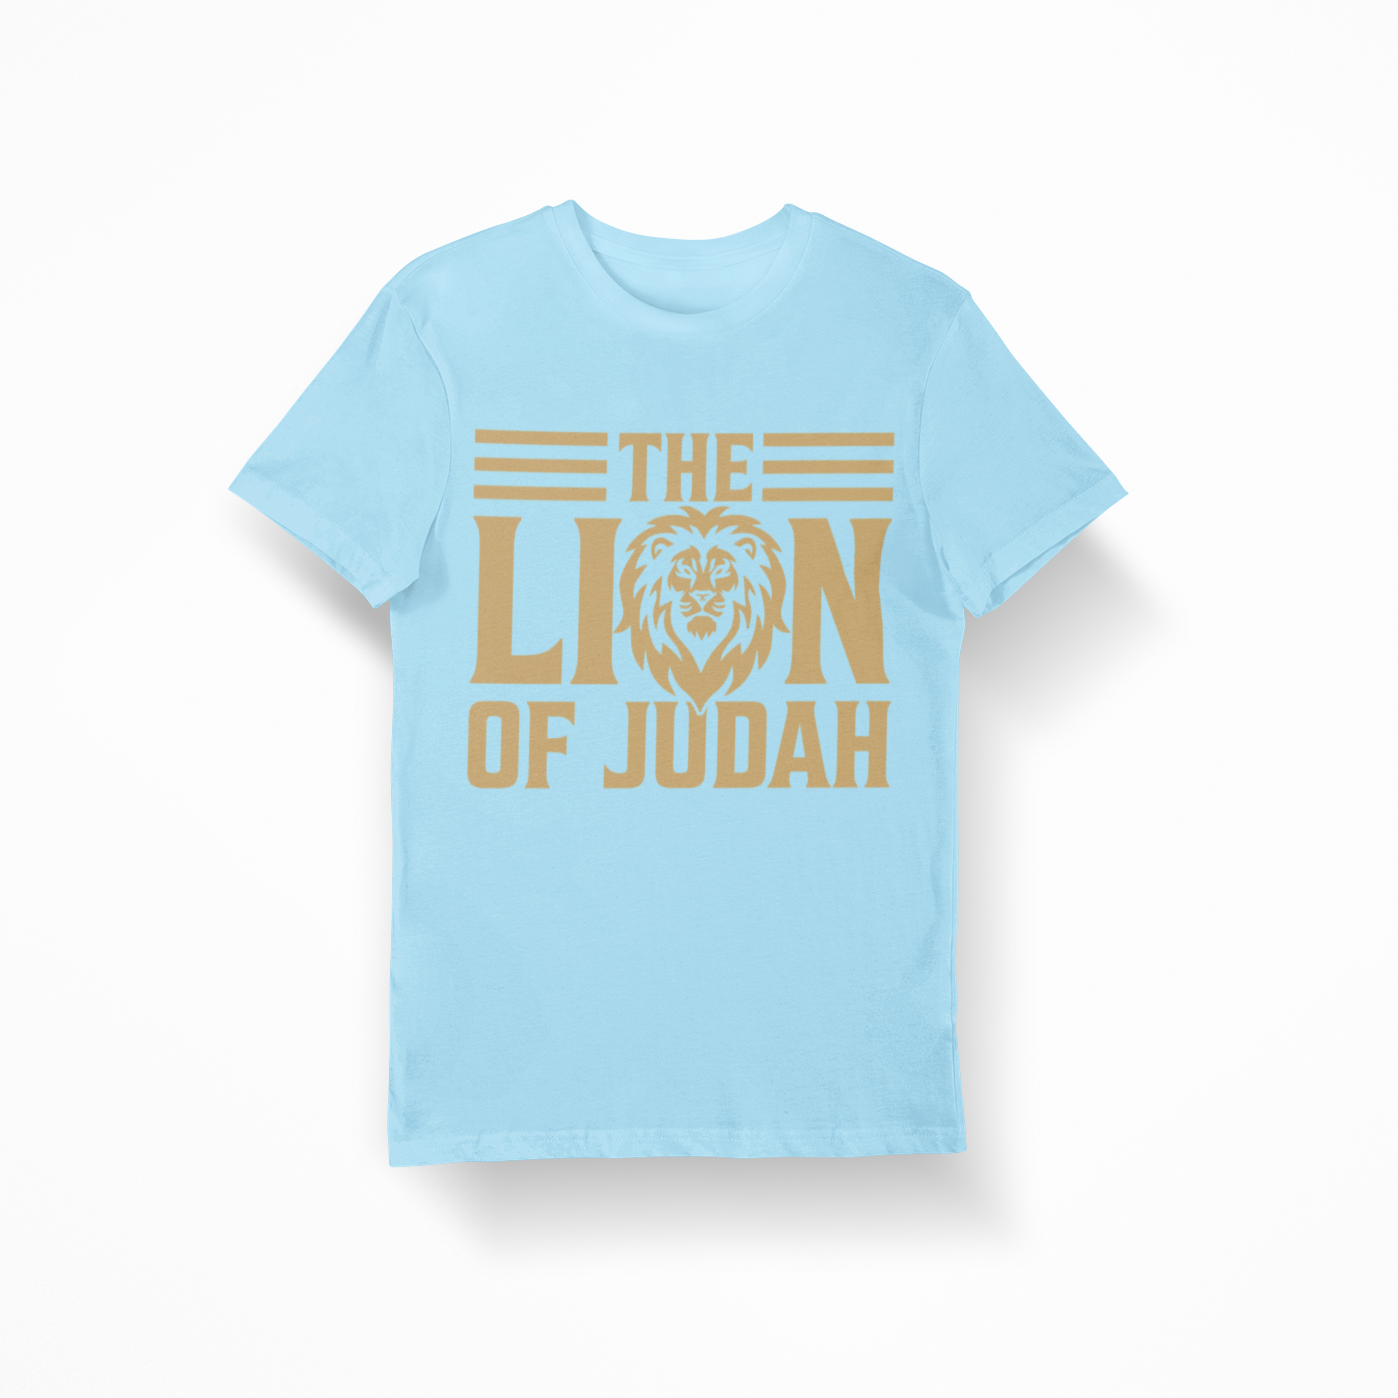 THE LION OF JUDAH T-SHIRT